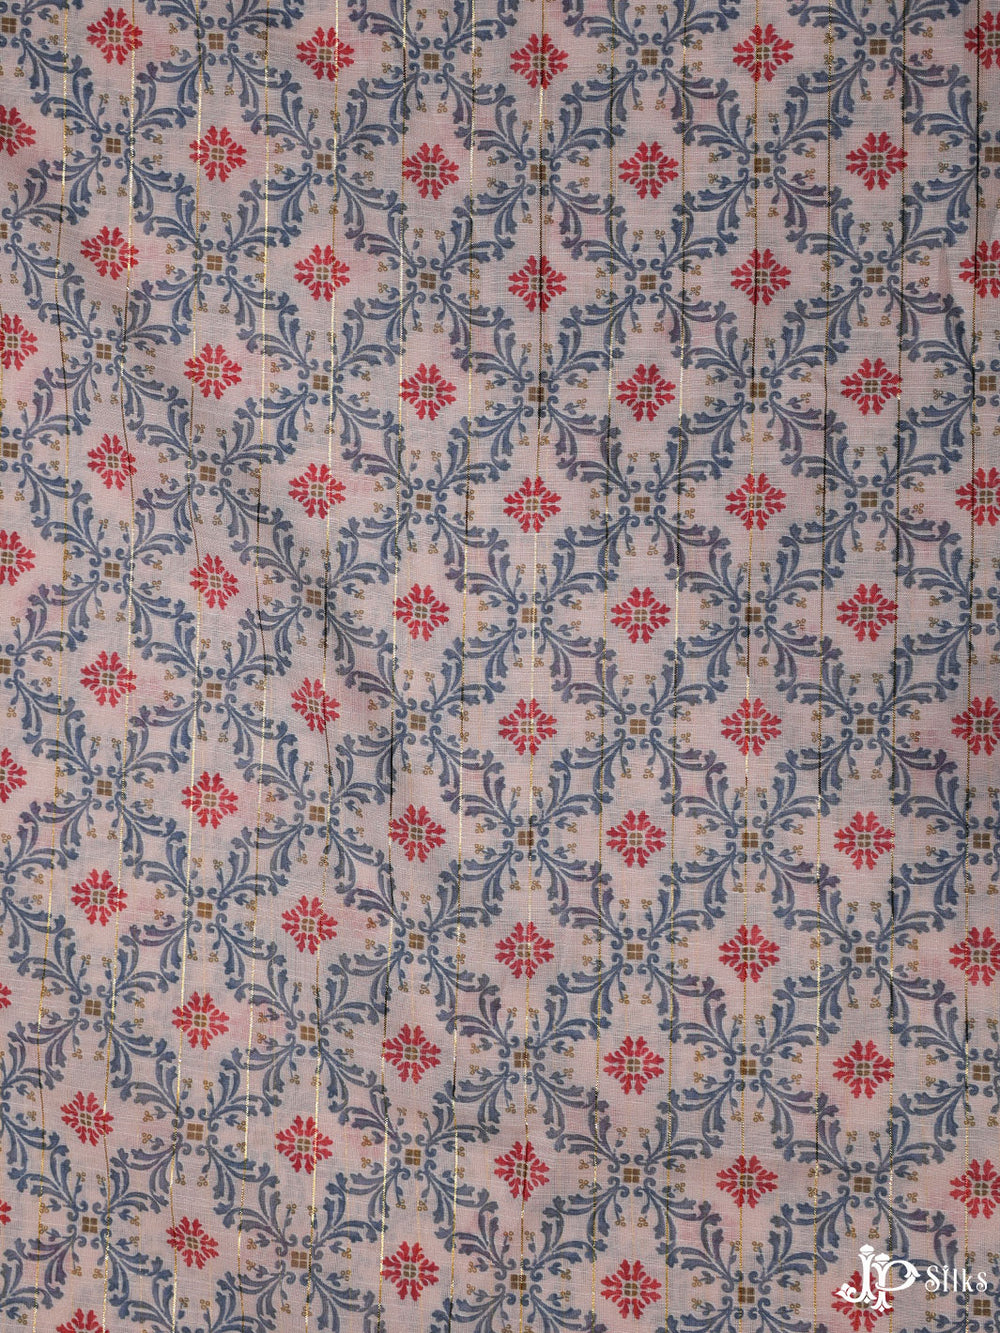 Multicolor Digital Printed Munga Cotton Fabric - E3336 - View 1